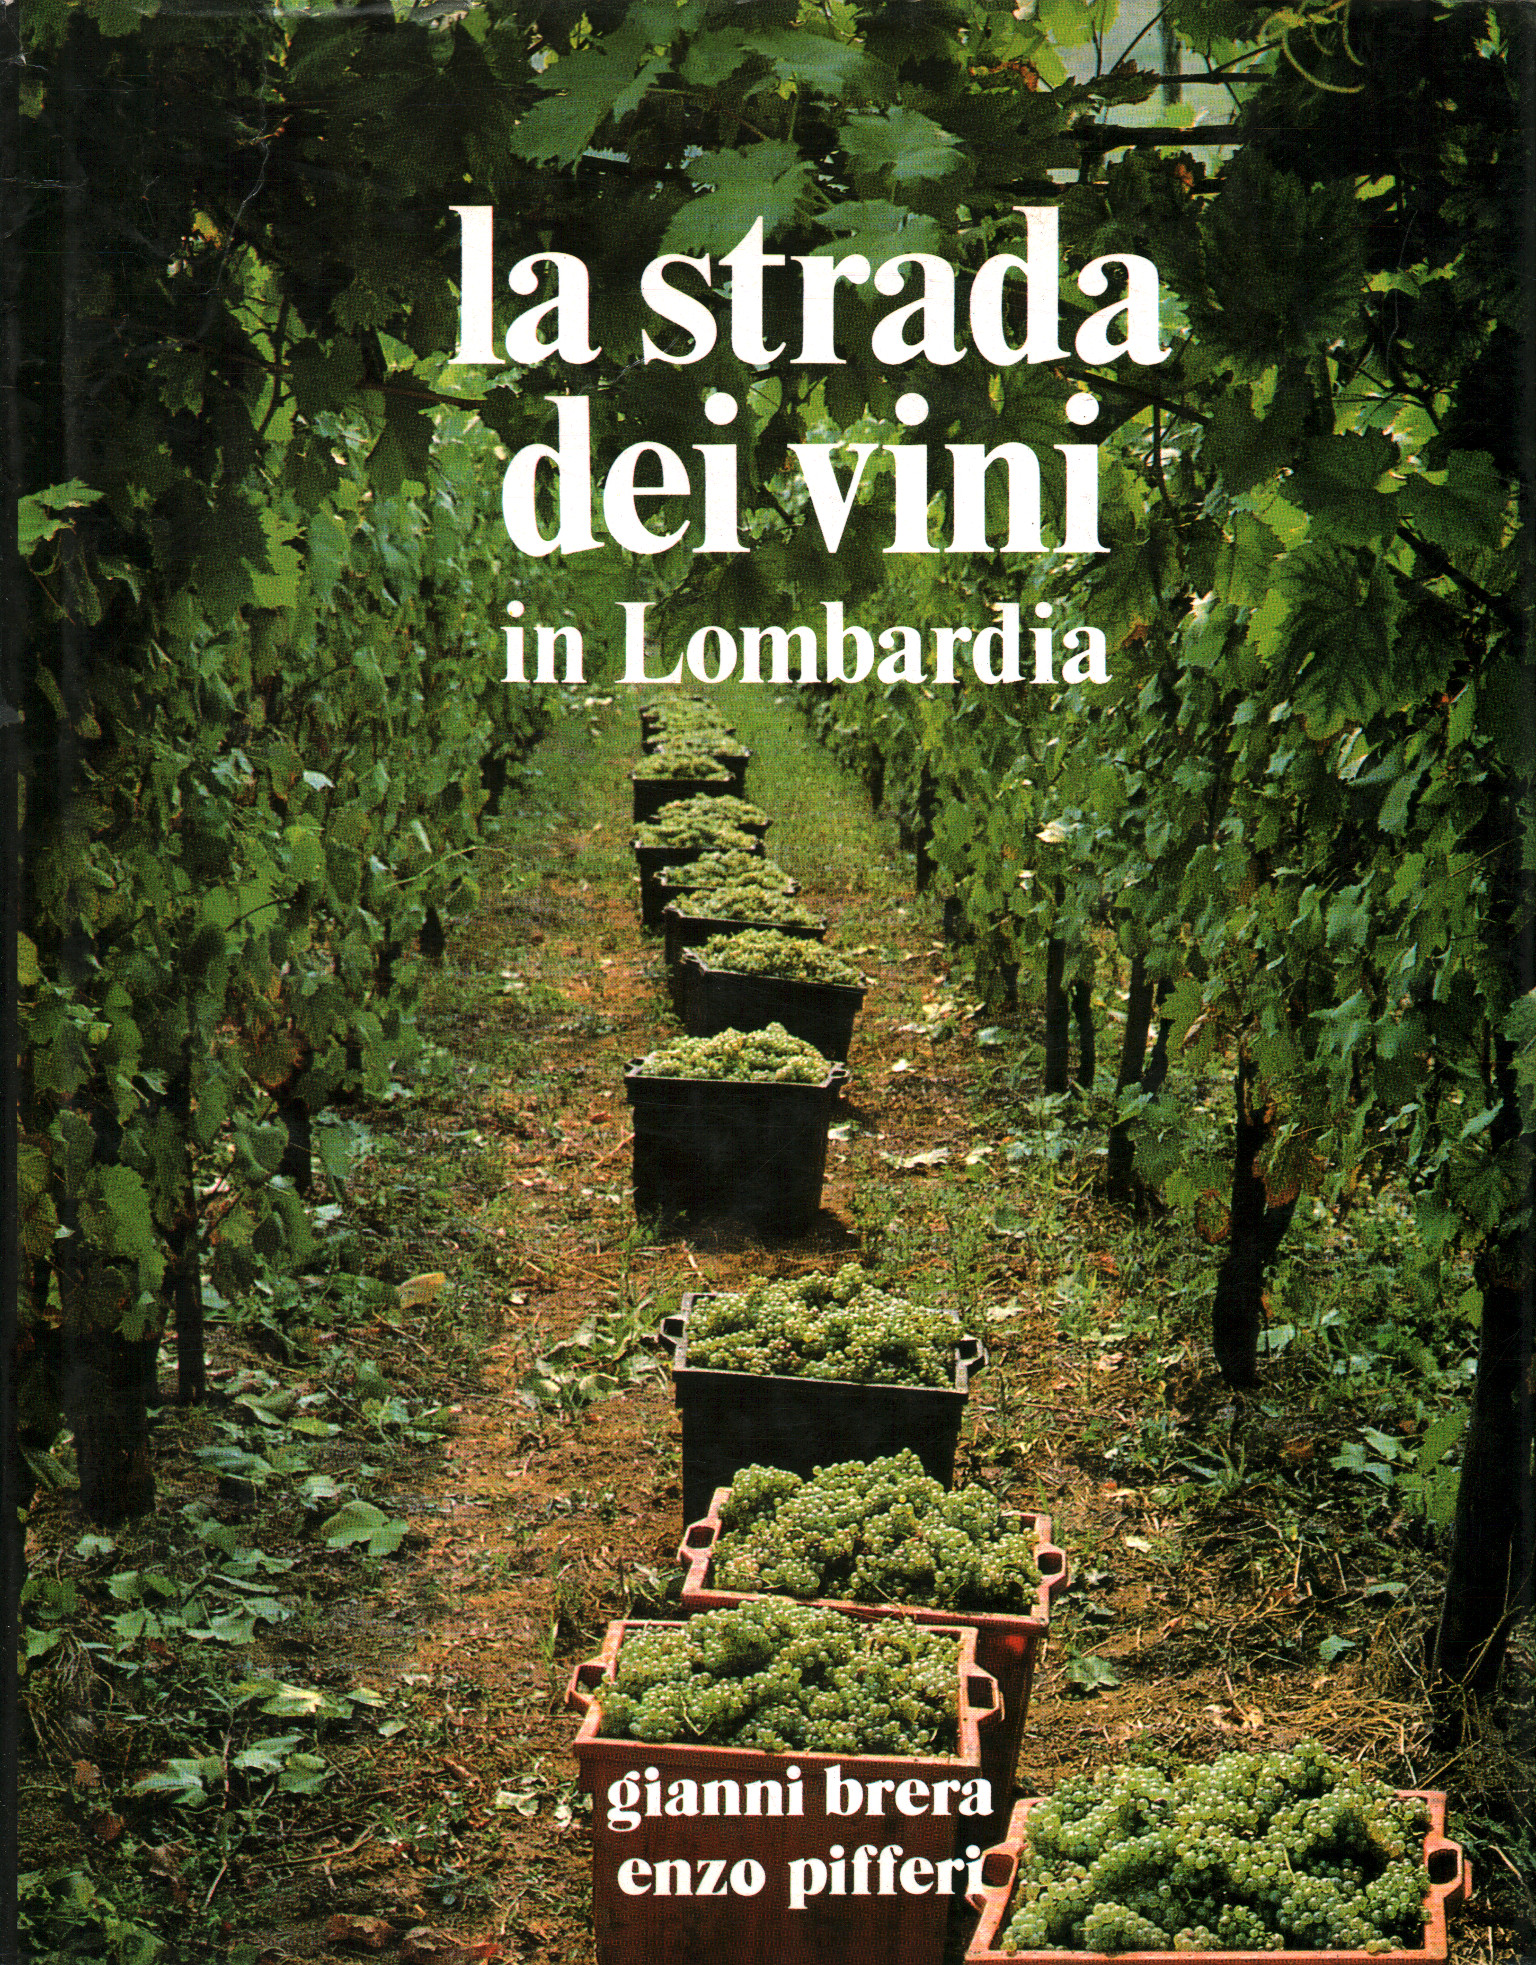 The wine route in Lombardy, Laura Tettamanzi Enzo Pifferi